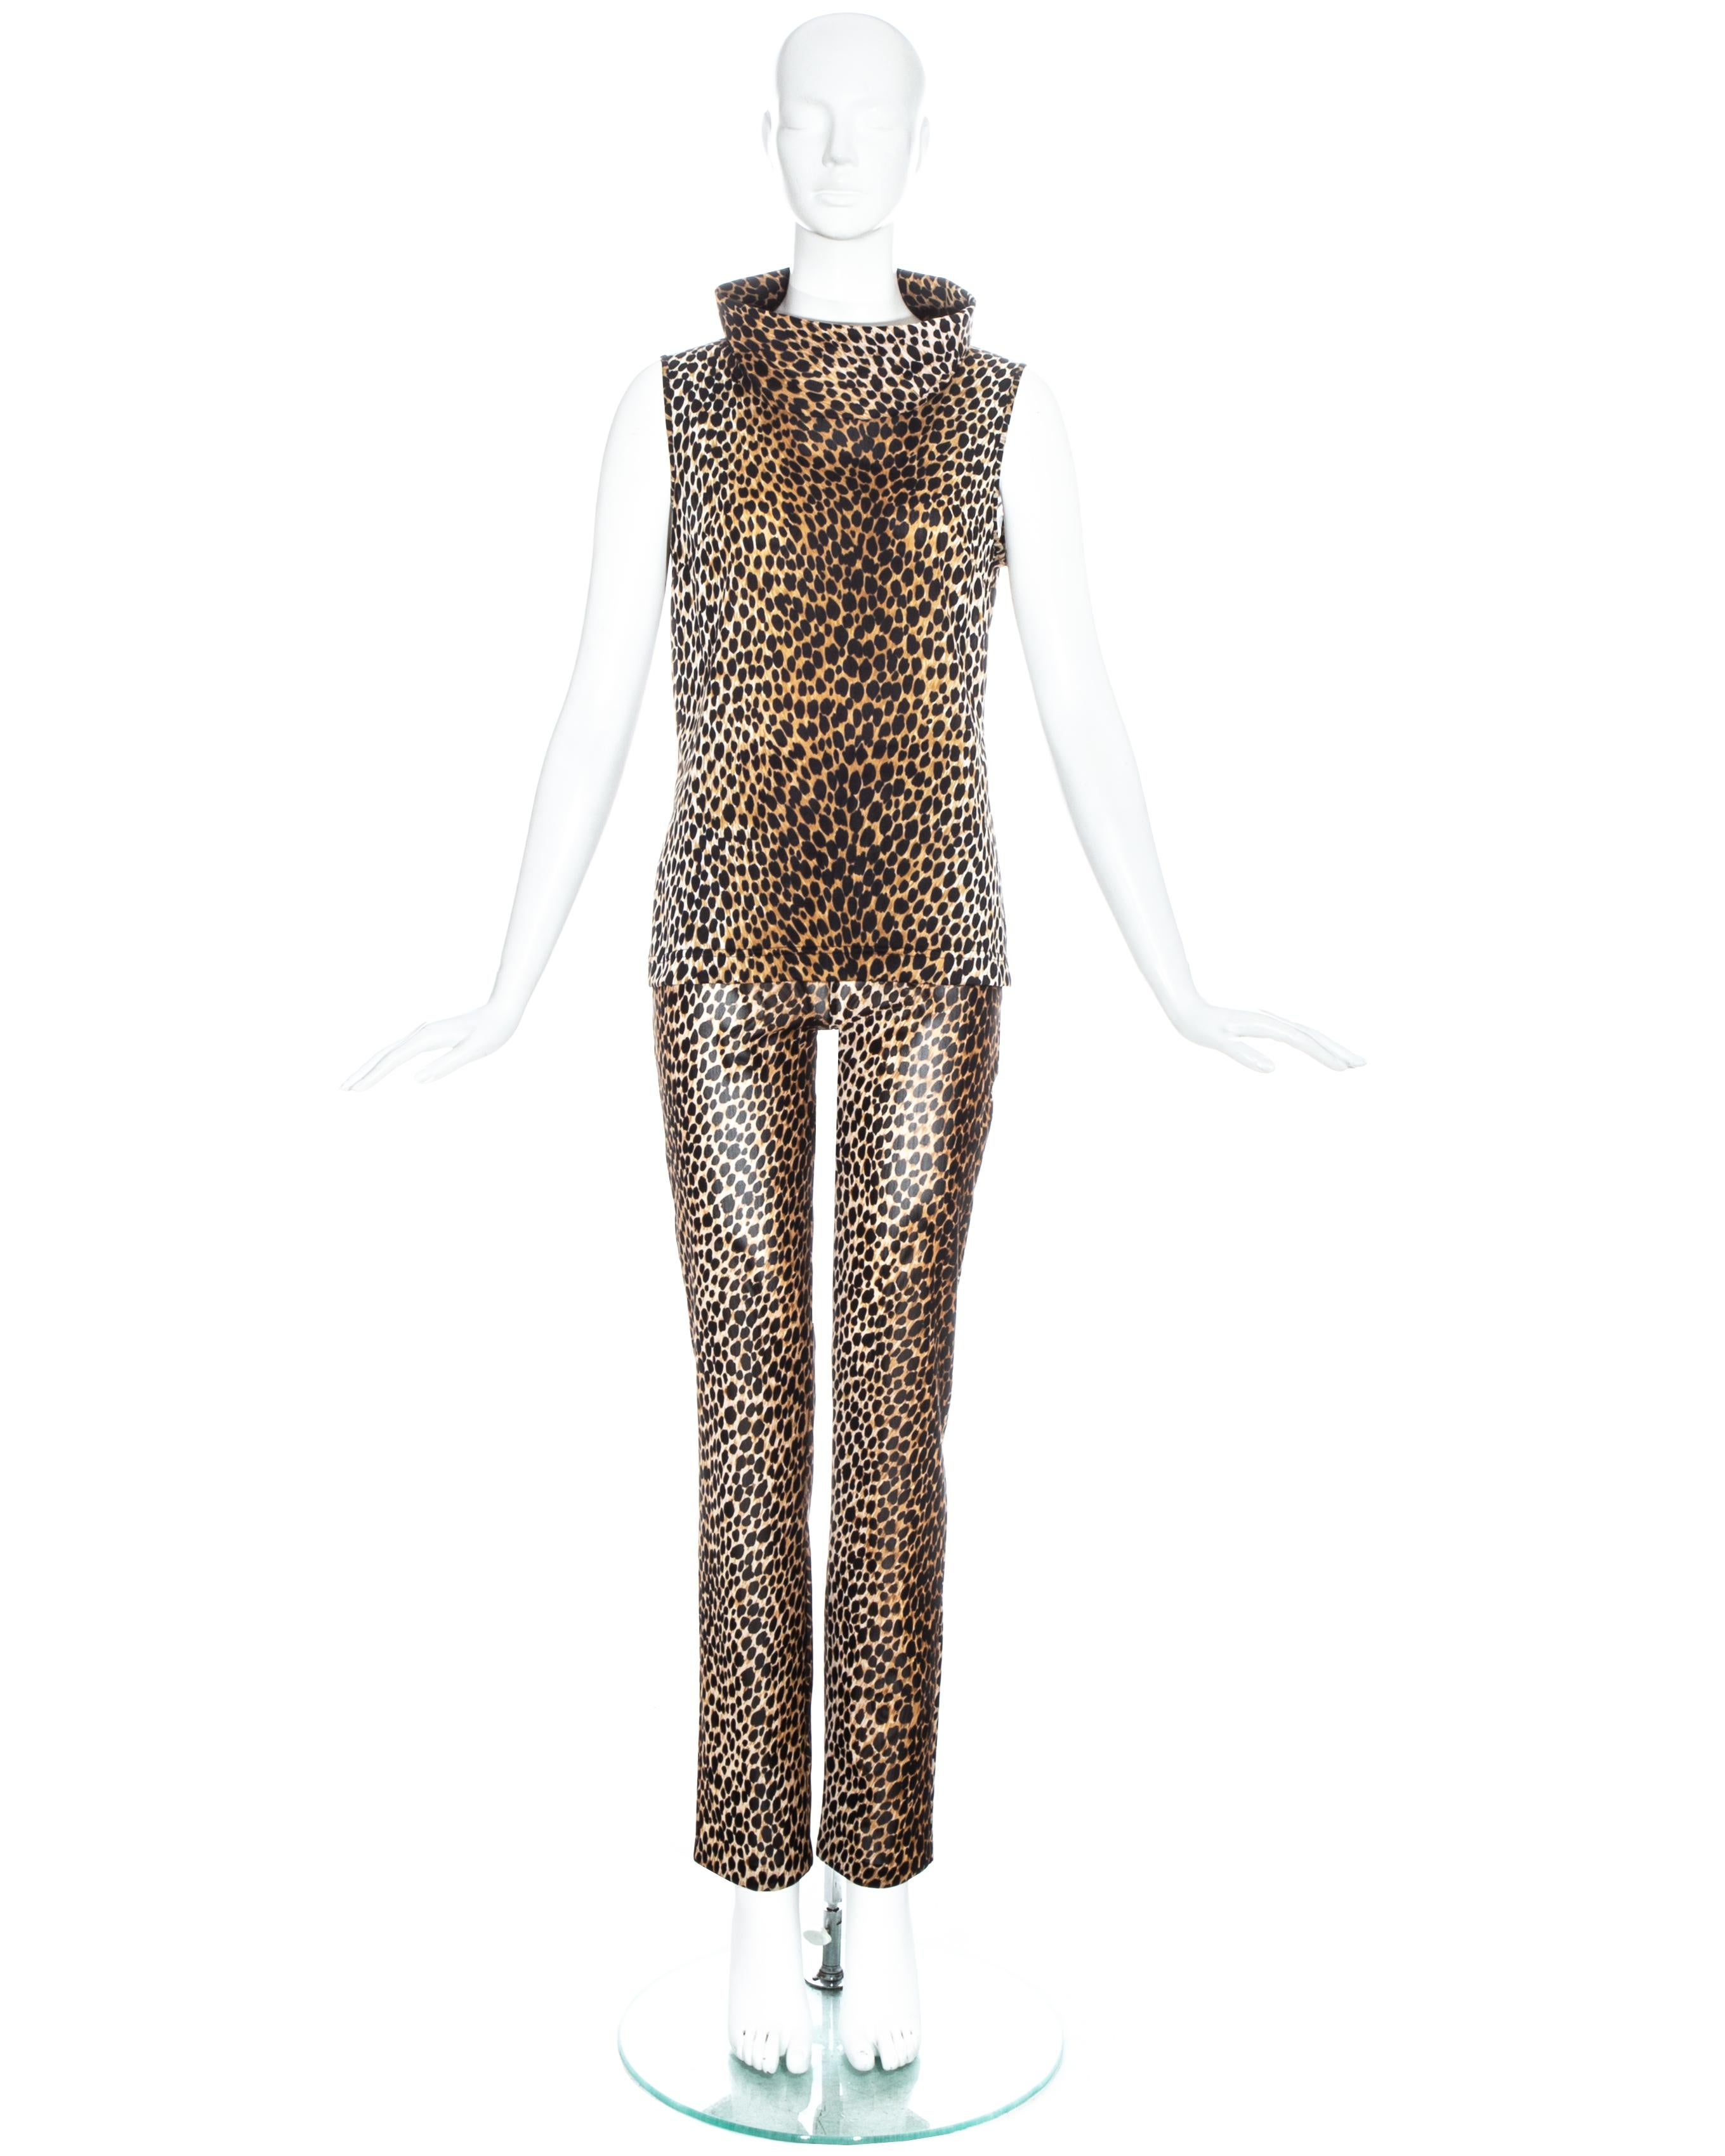 Dolce & Gabbana cheetah print pants and turtle neck vest set.

Spring-Summer 1996